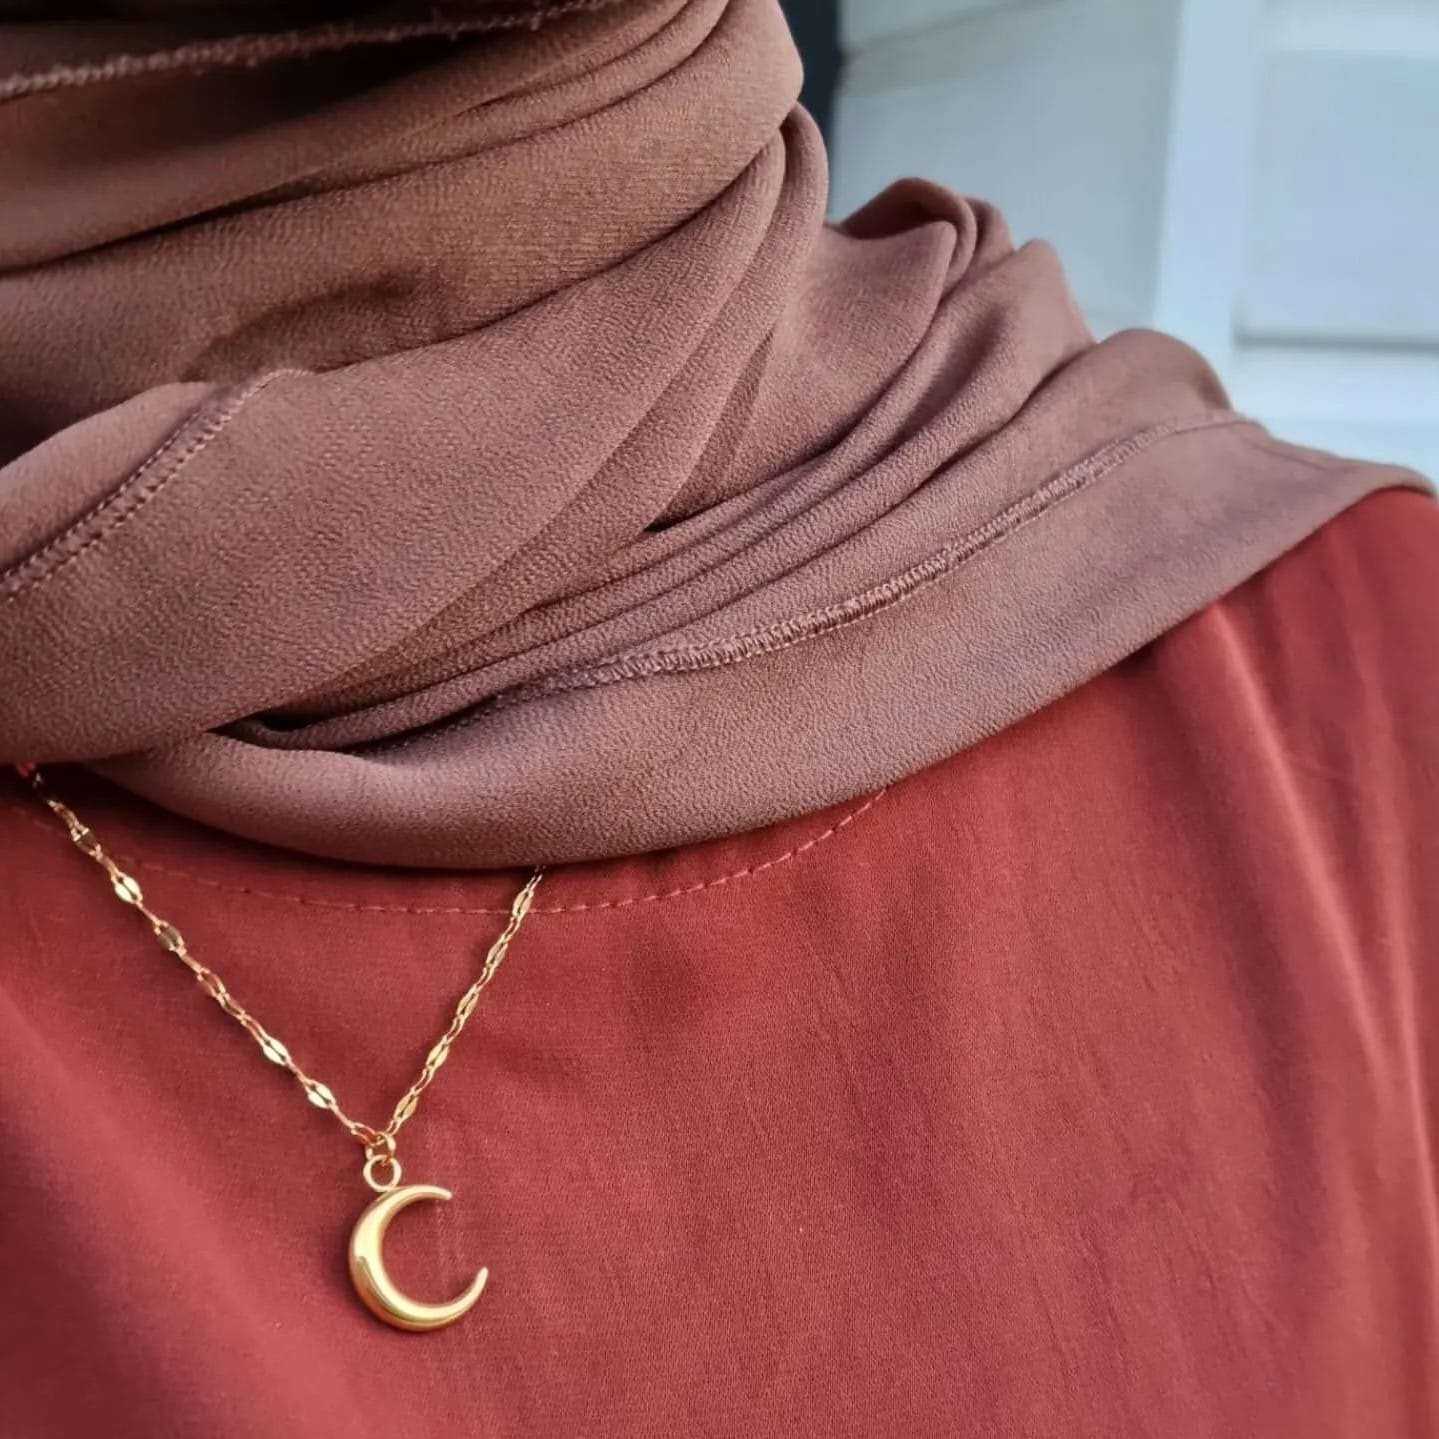 Crescent Moon Necklace - Necklace - Fajr Noor